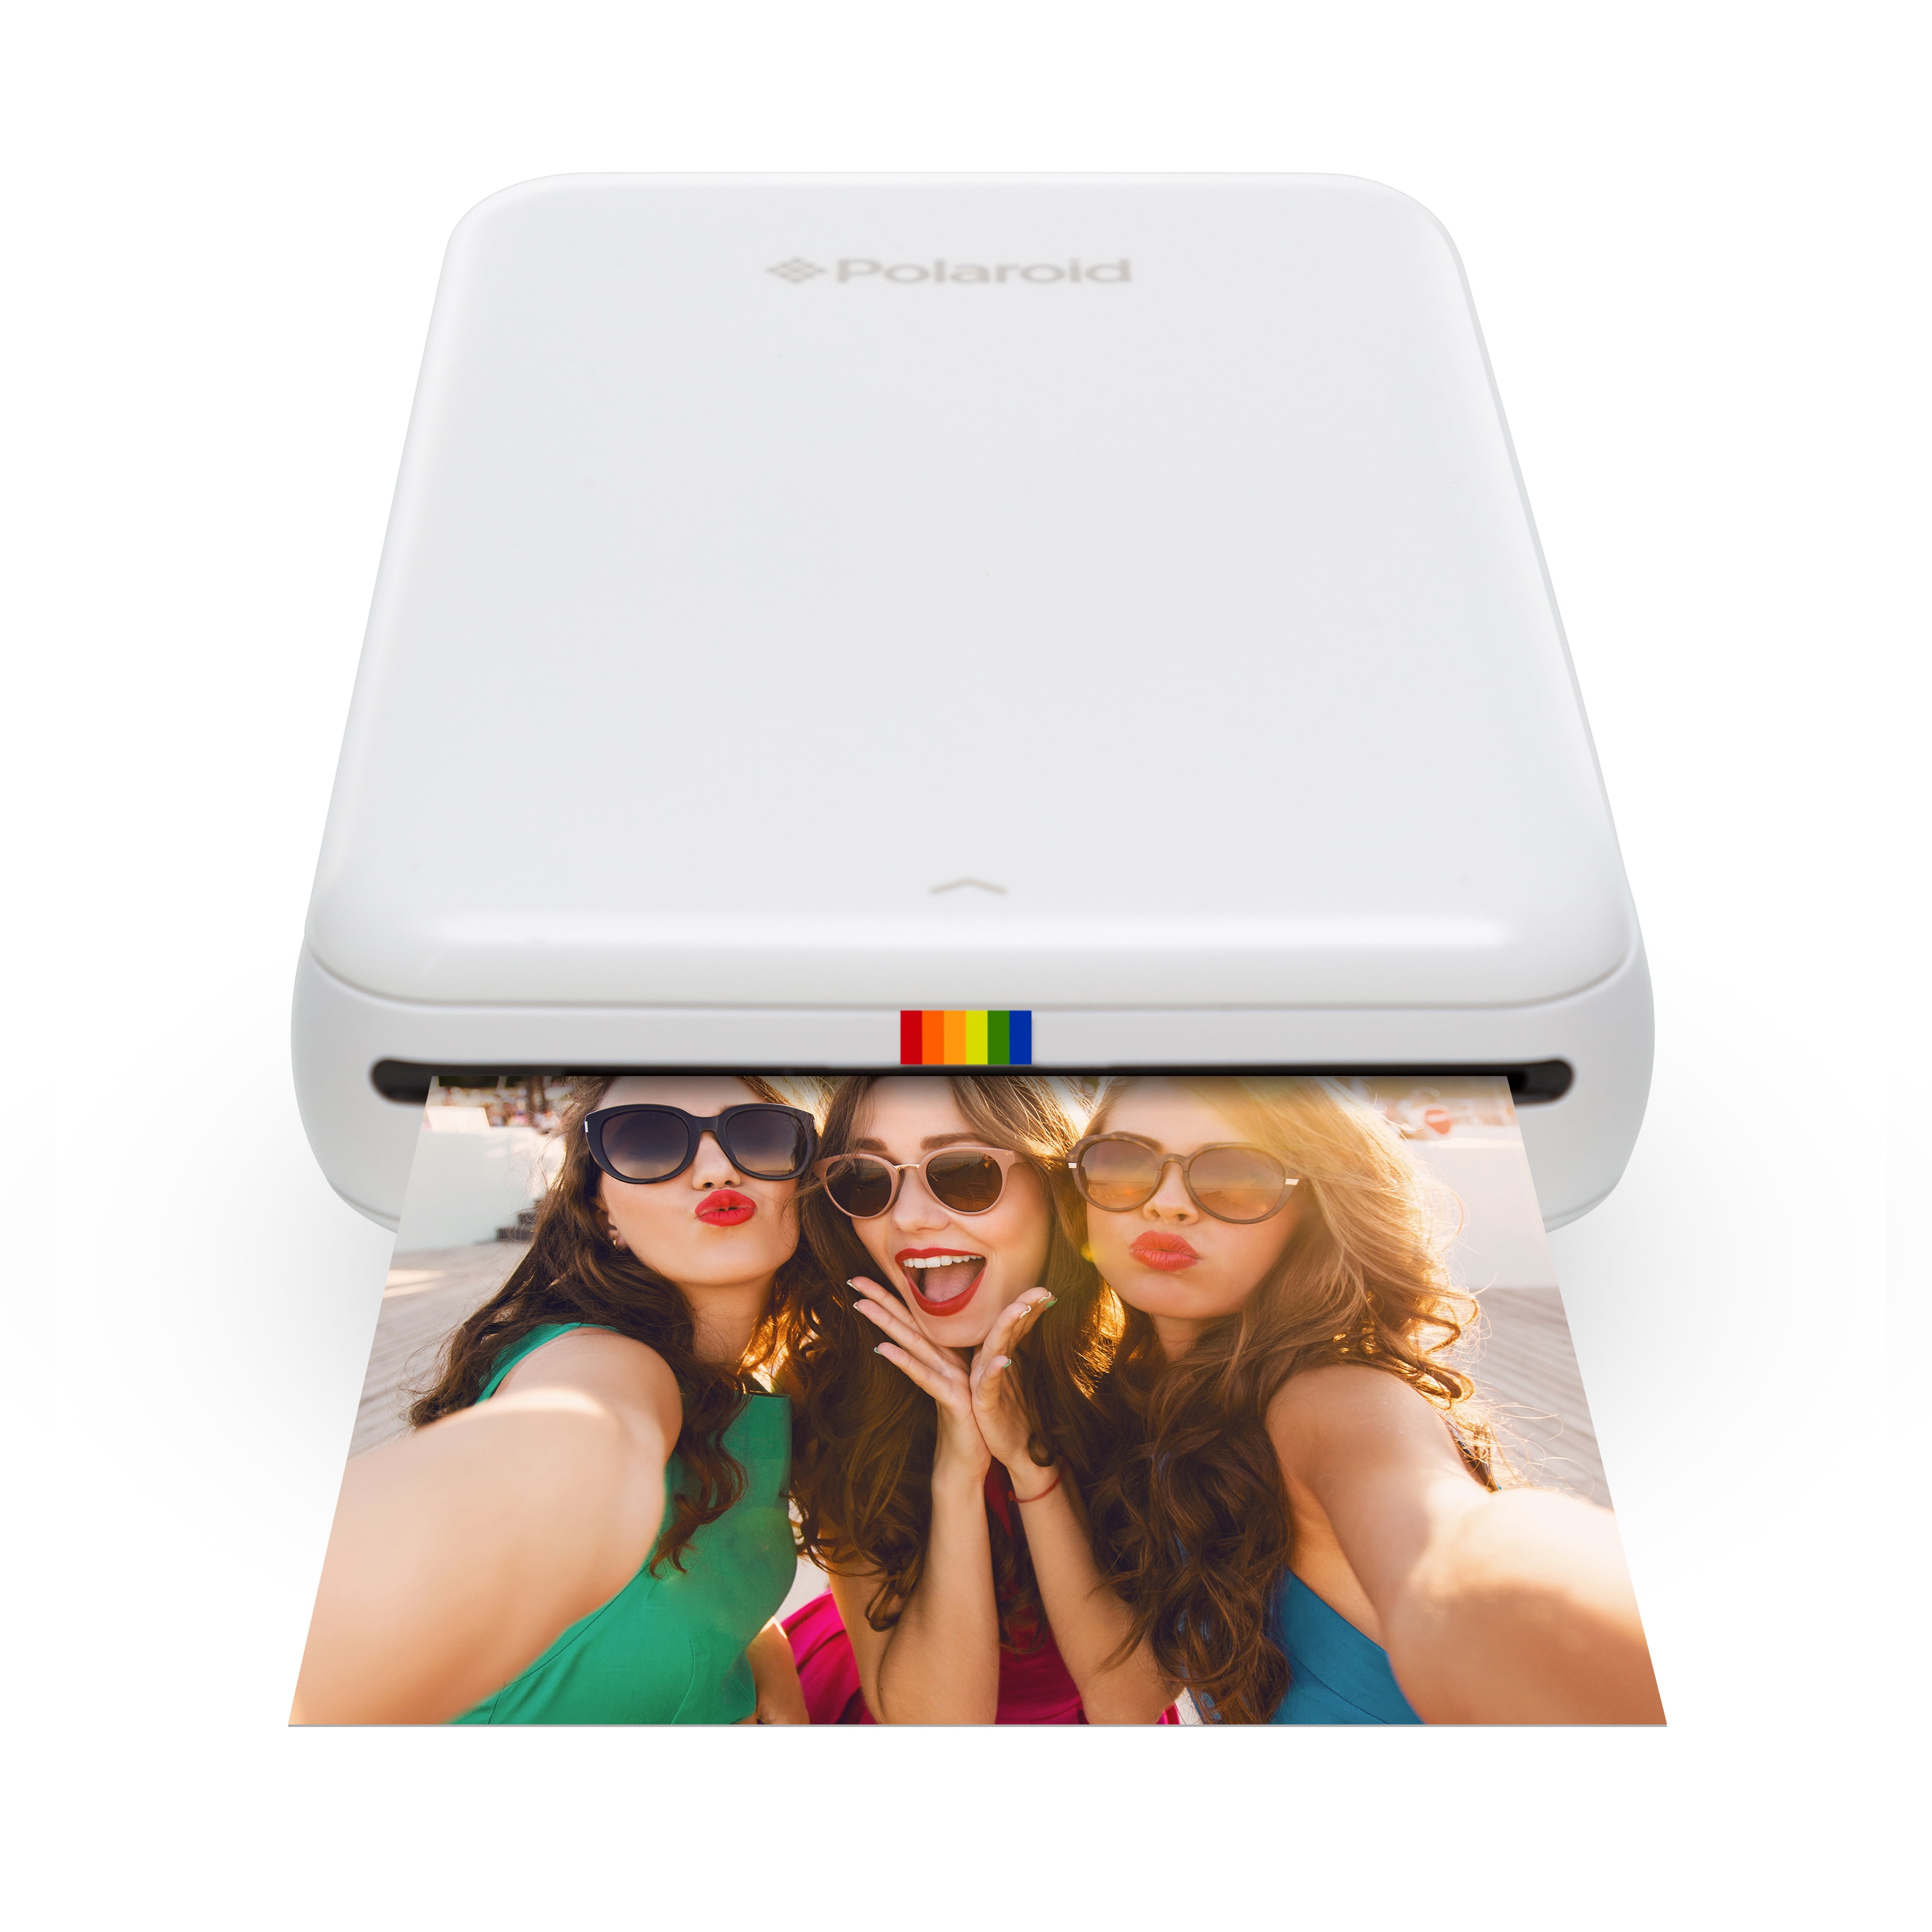 Polaroid's new mobile printer turns your iPhone photos into